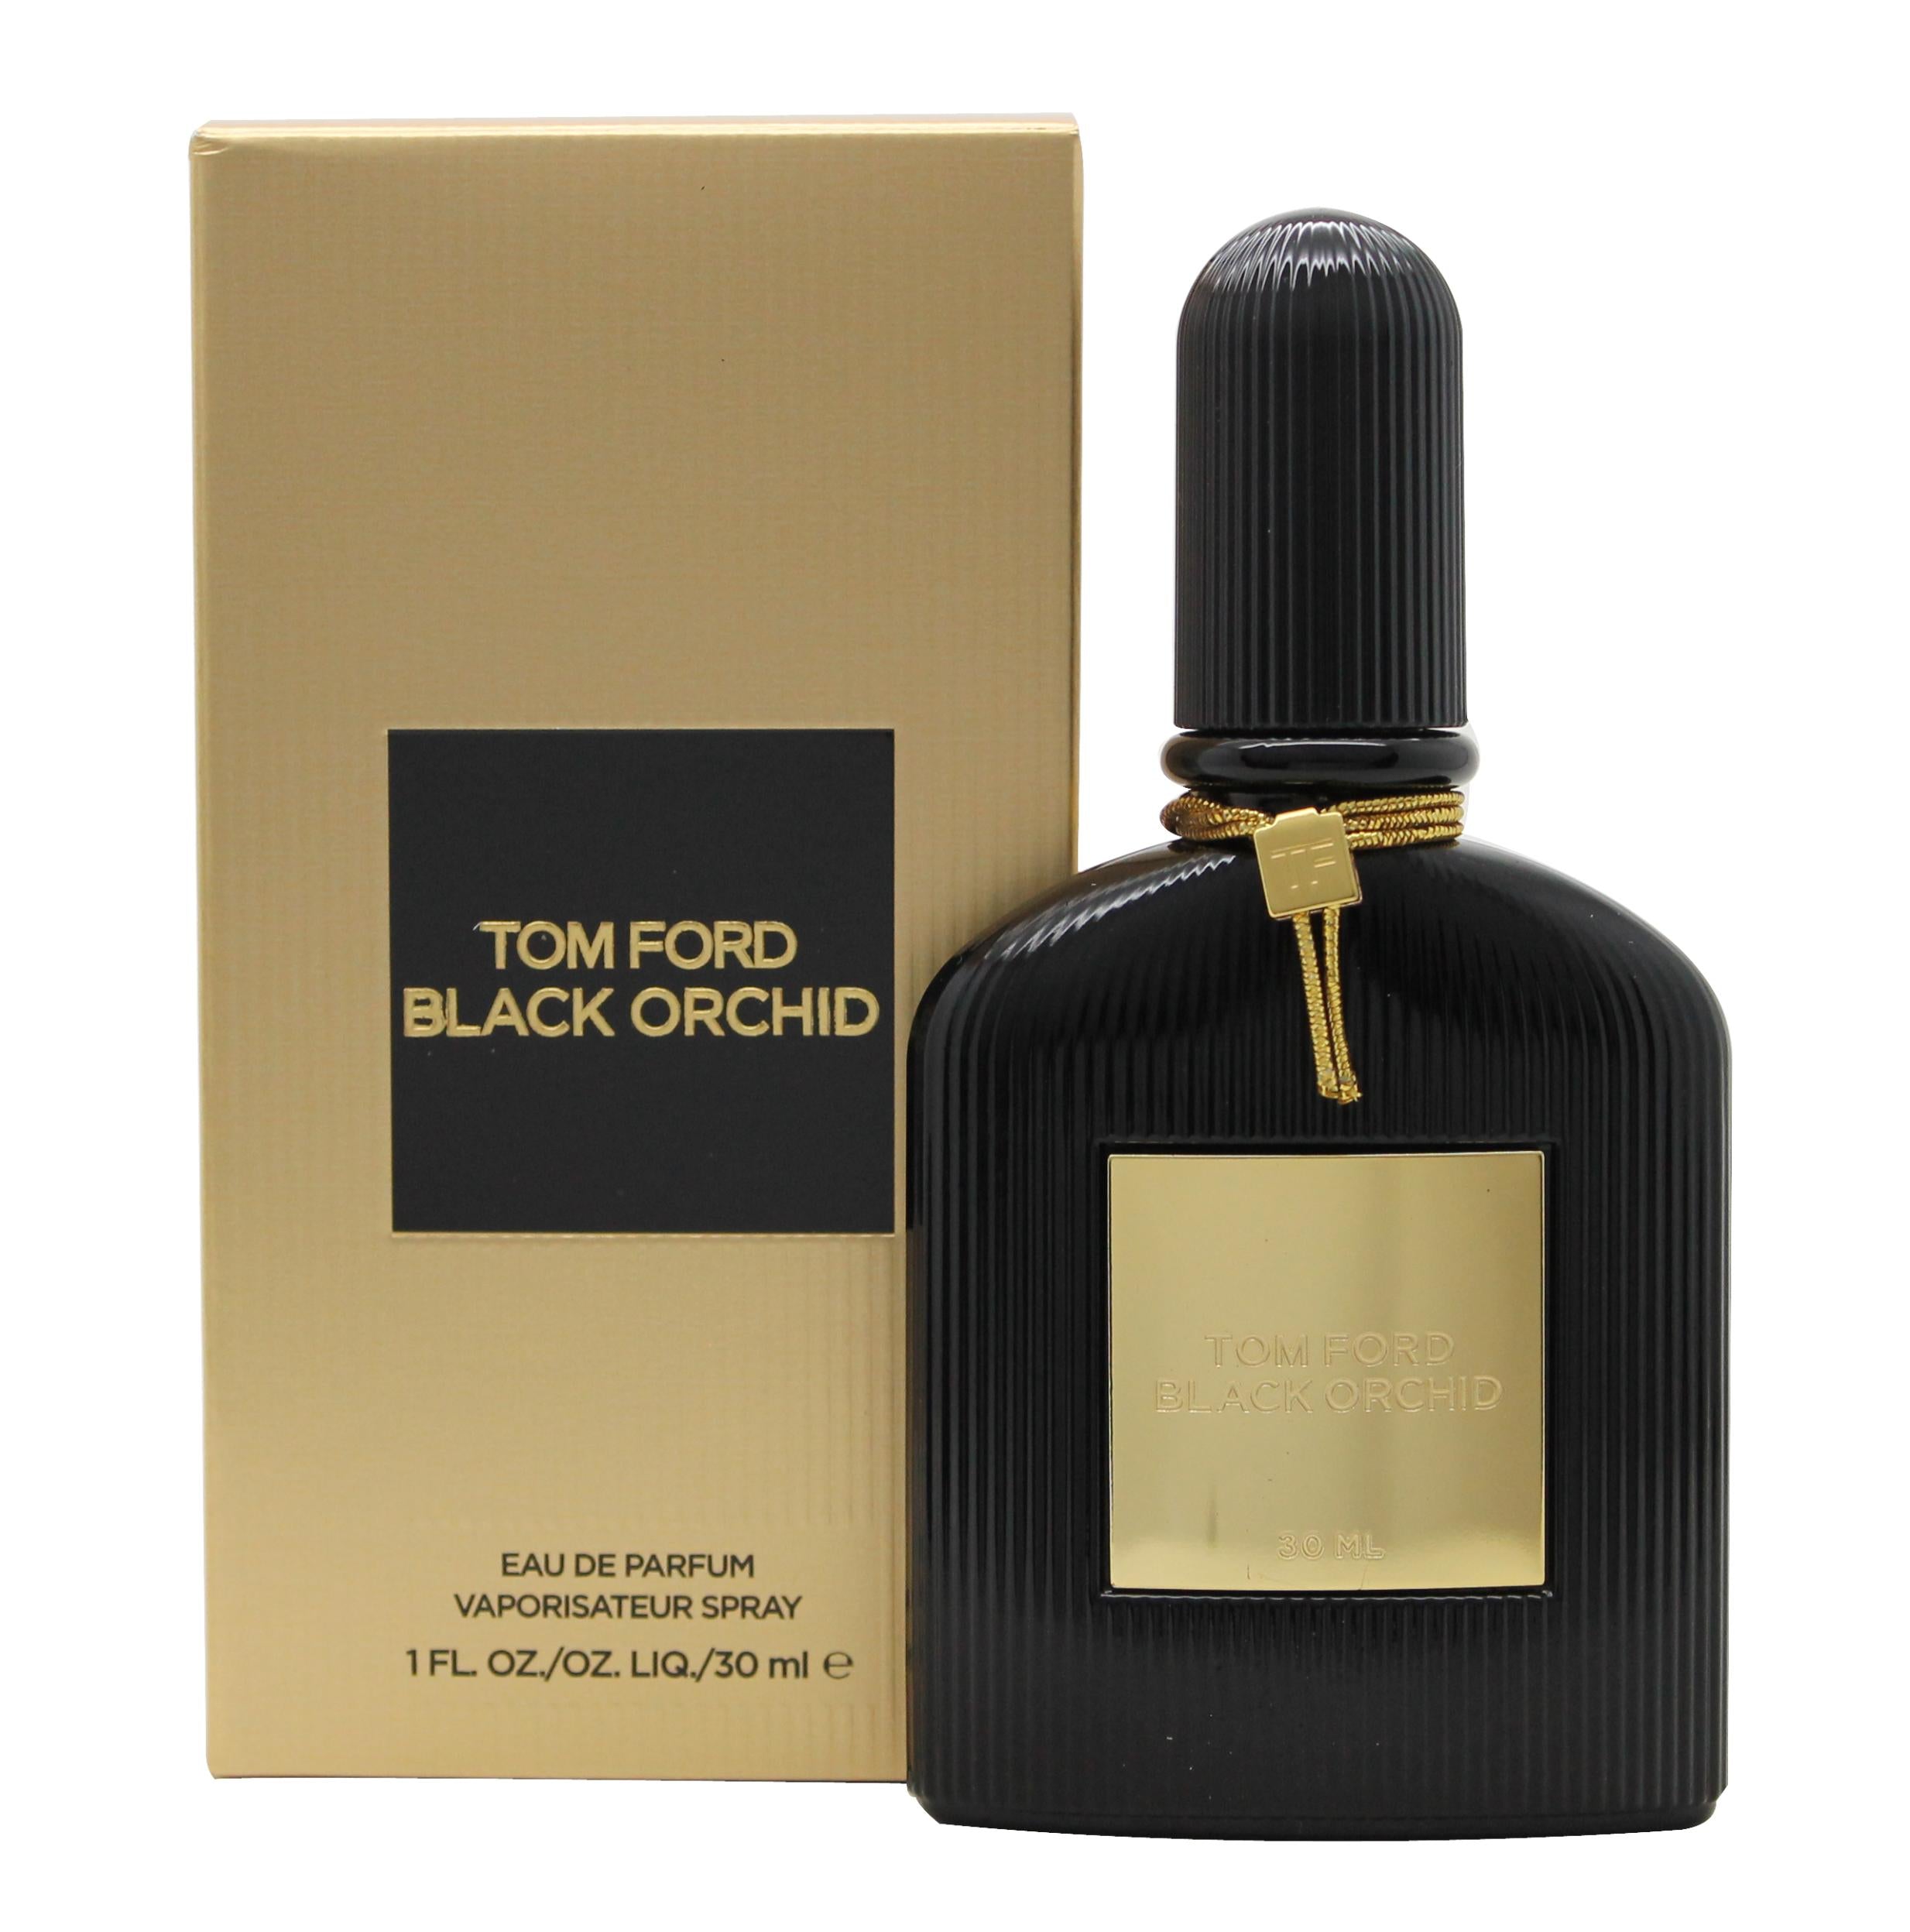 View Tom Ford Black Orchid Eau de Parfum 30ml Sprej information